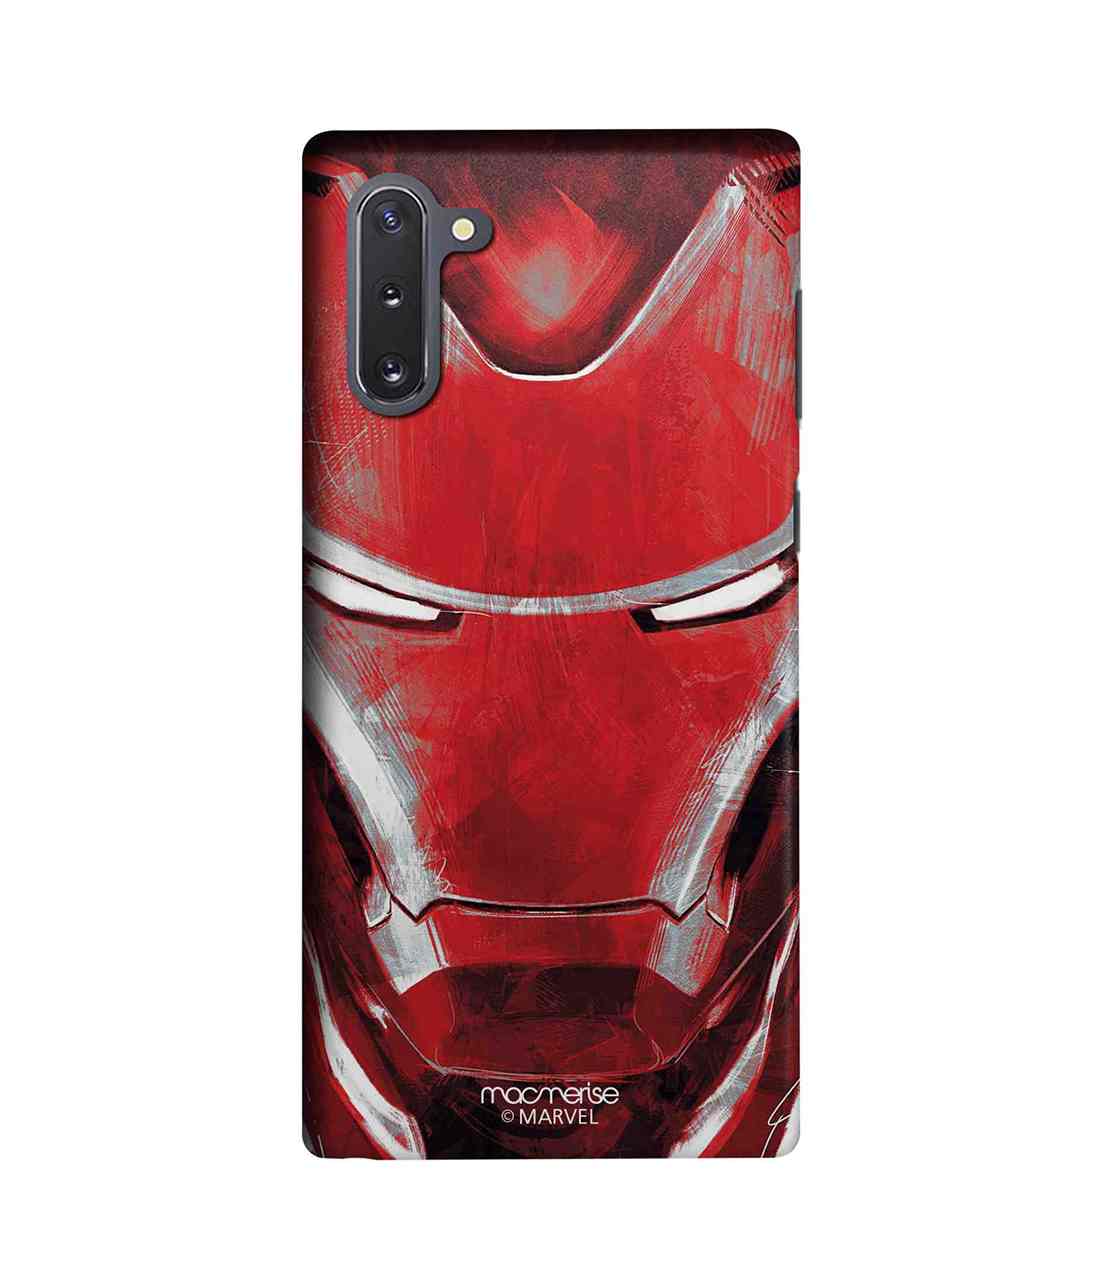 Buy Charcoal Art Iron man - Sleek Phone Case for Samsung Note10 Online